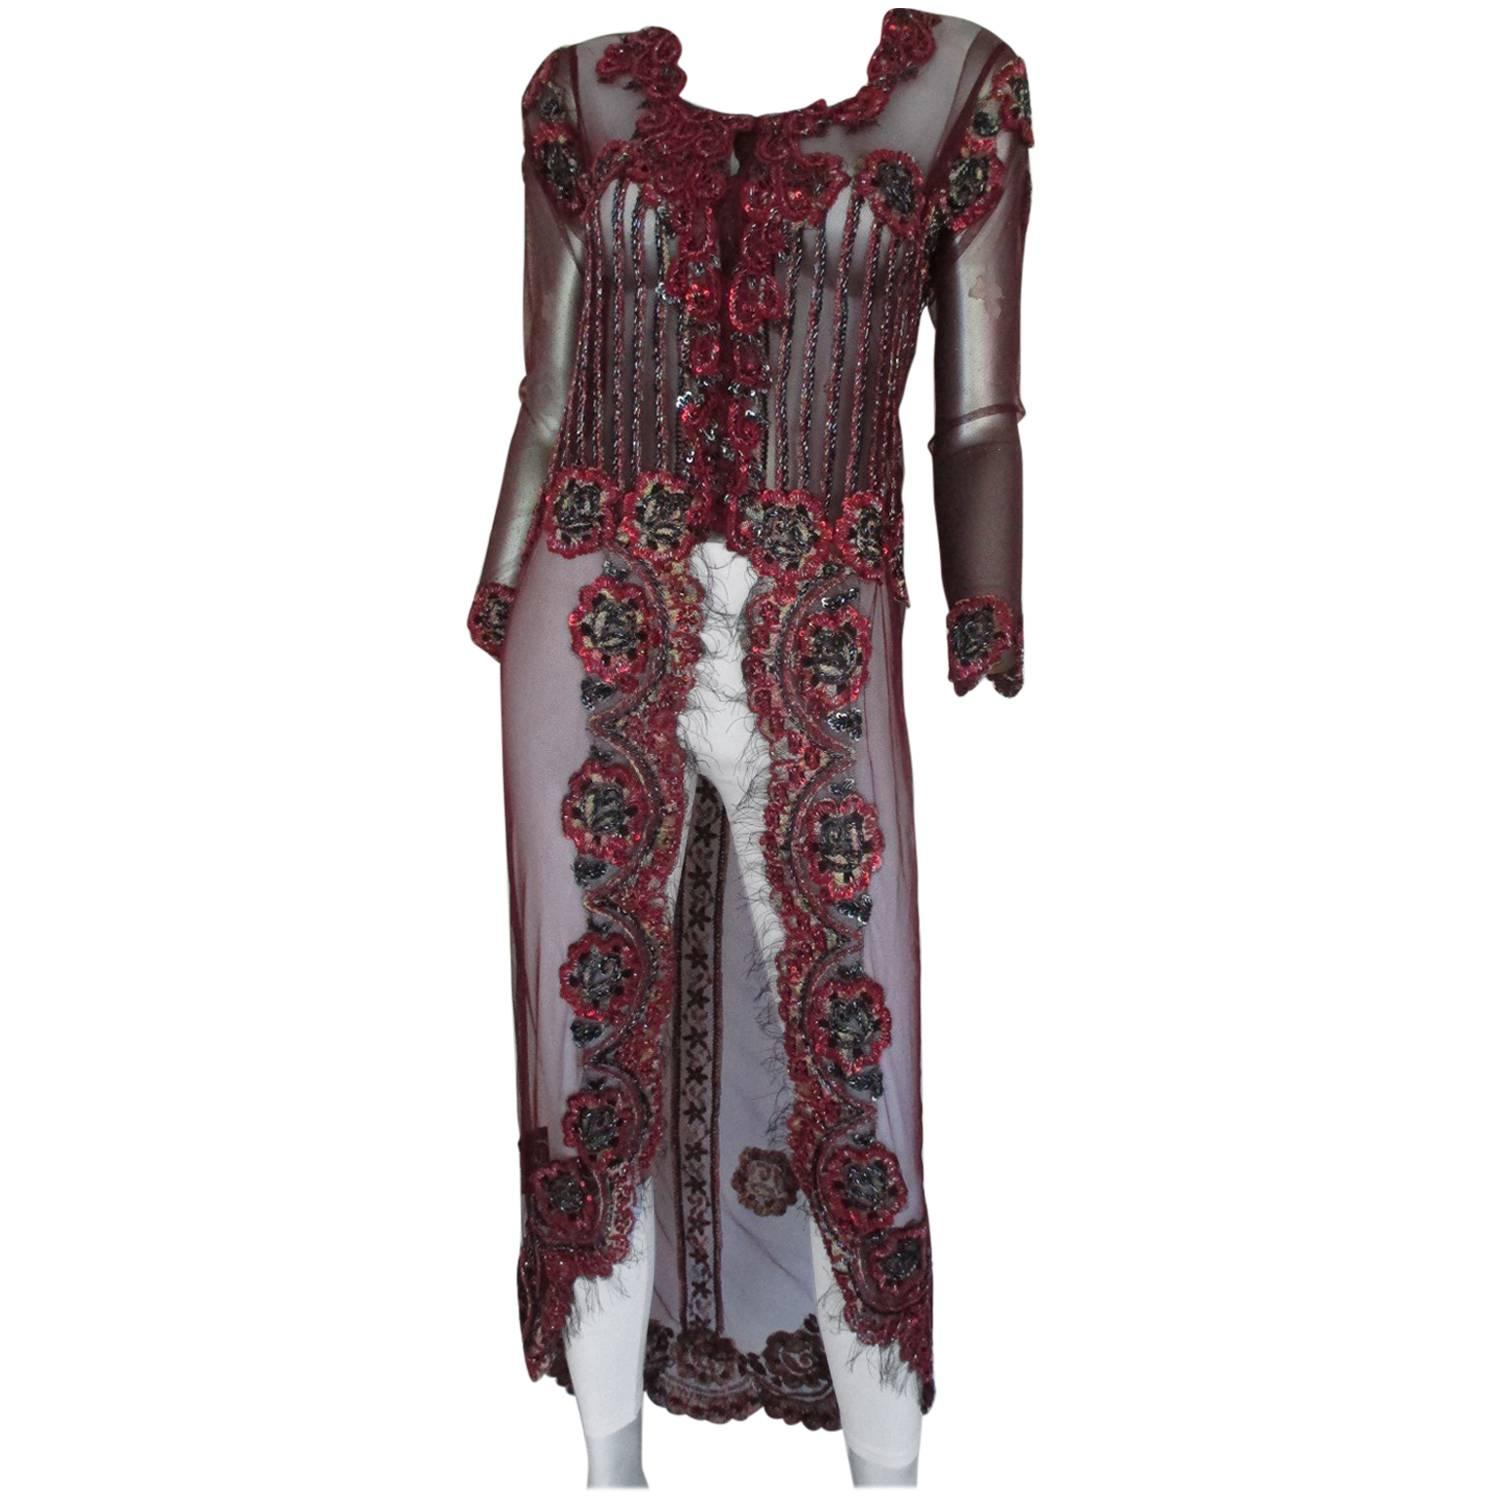  bordeaux sequin flower overcoat dress